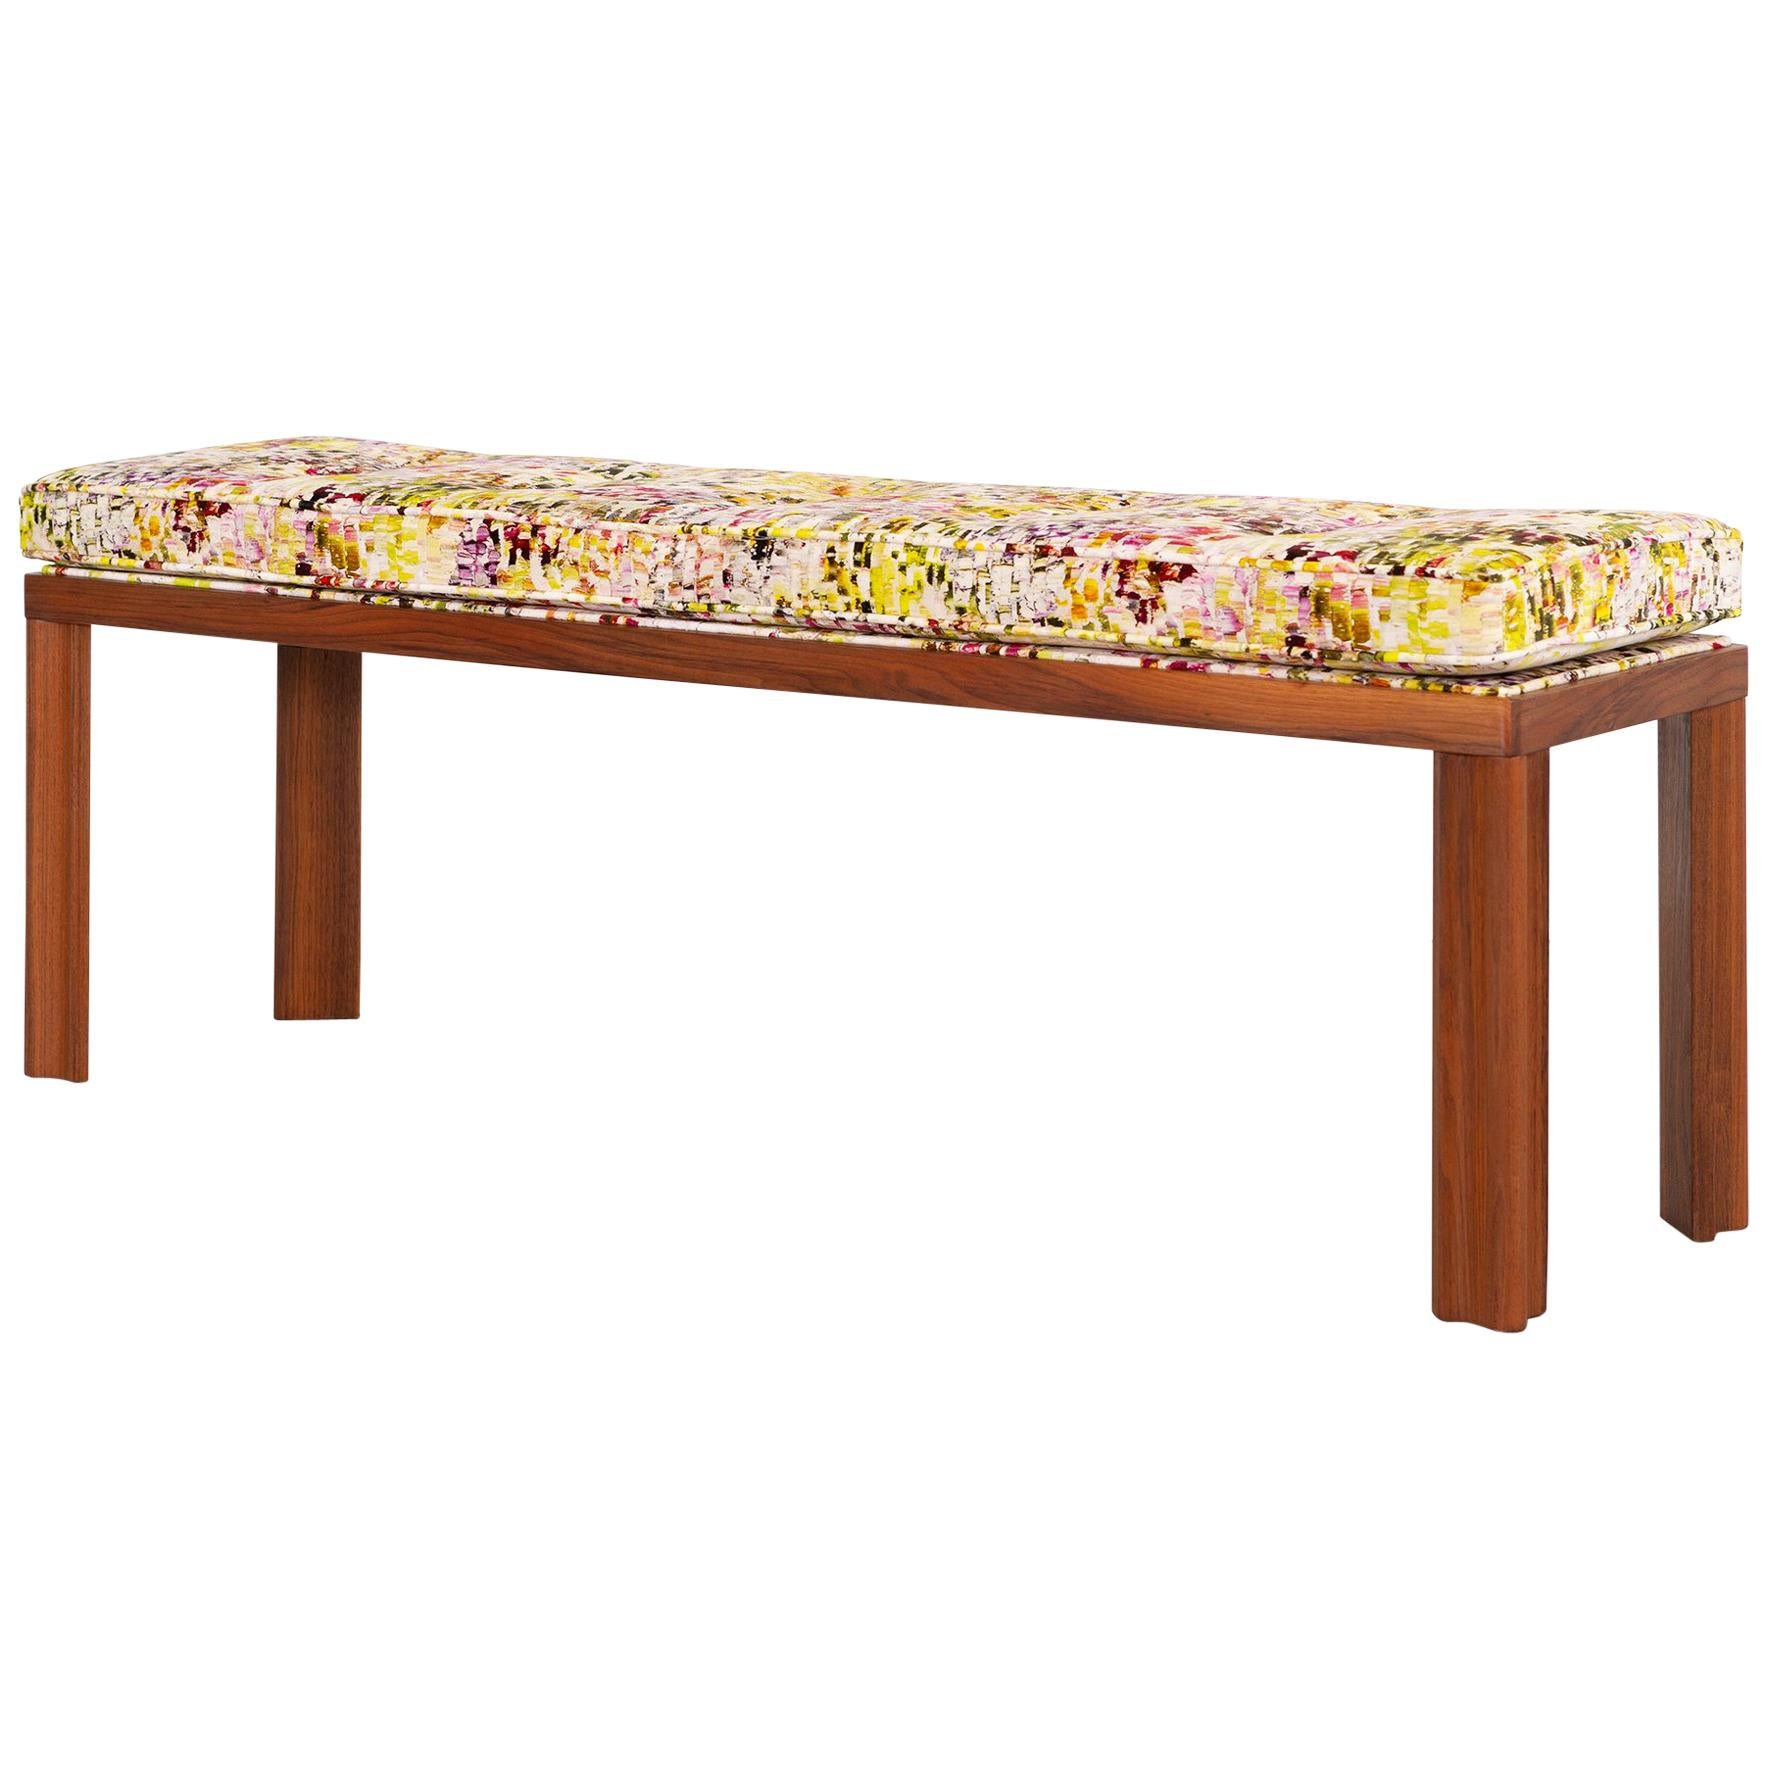 1940s Mid-Century Modern Wooden Bench Freshly Upholstered For Sale